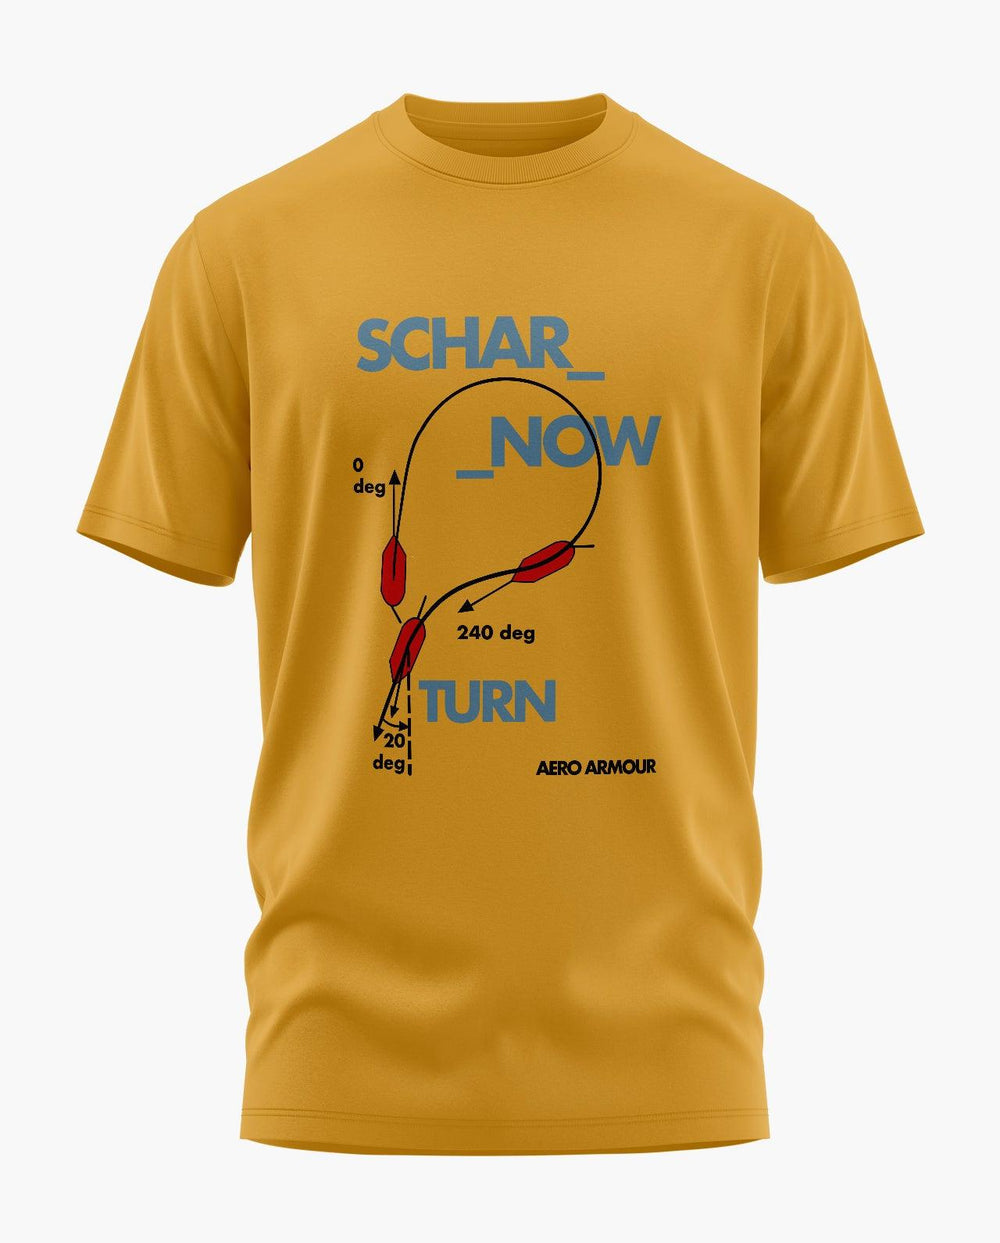 Scharnow Turn Recoloured T-Shirt - Aero Armour